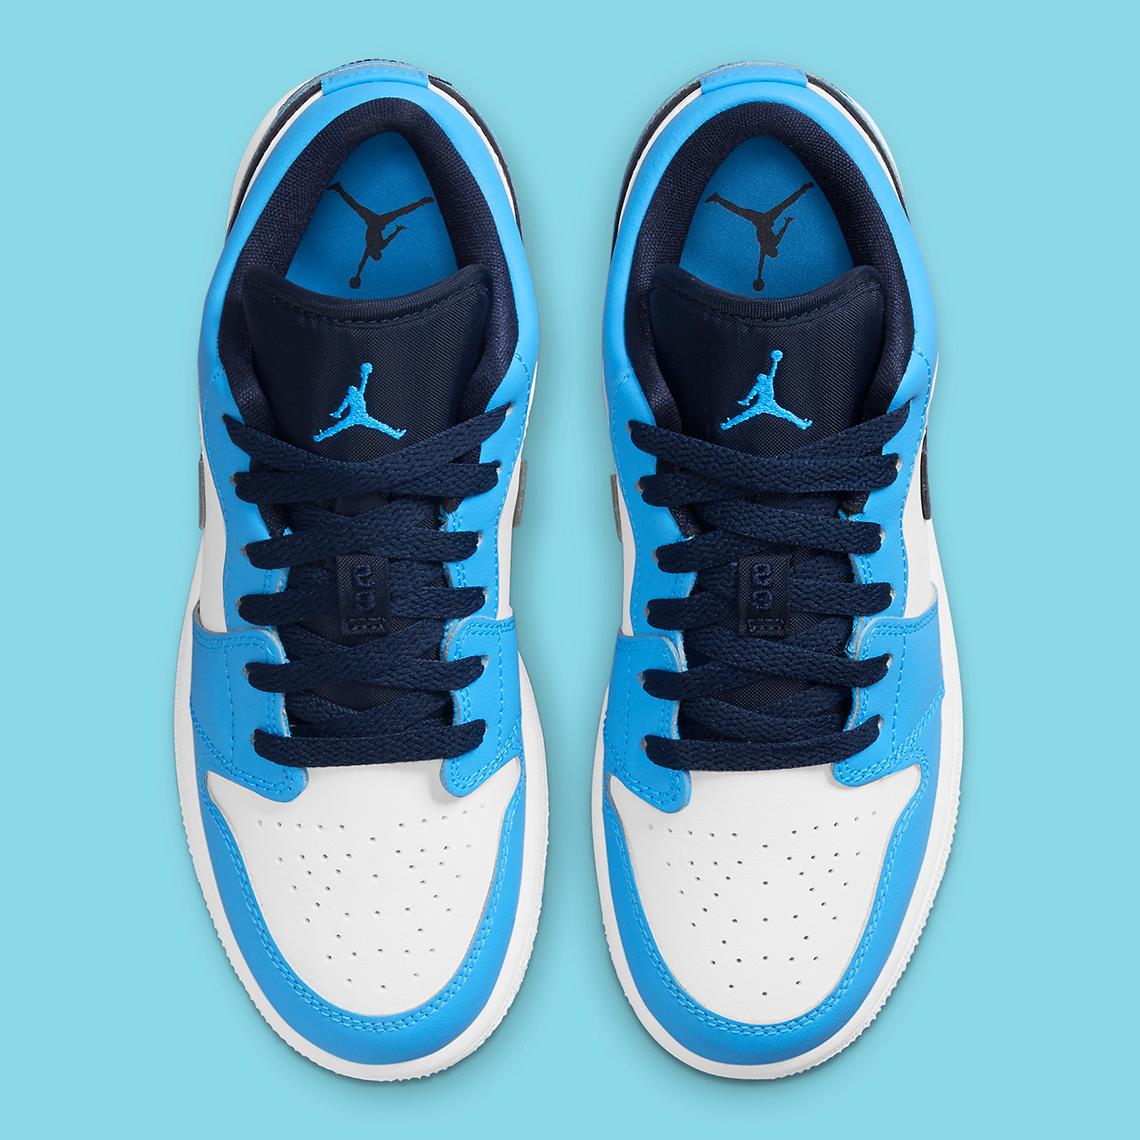 Air Jordan 1 Low Unc 144 Release Info Sneakernews Com